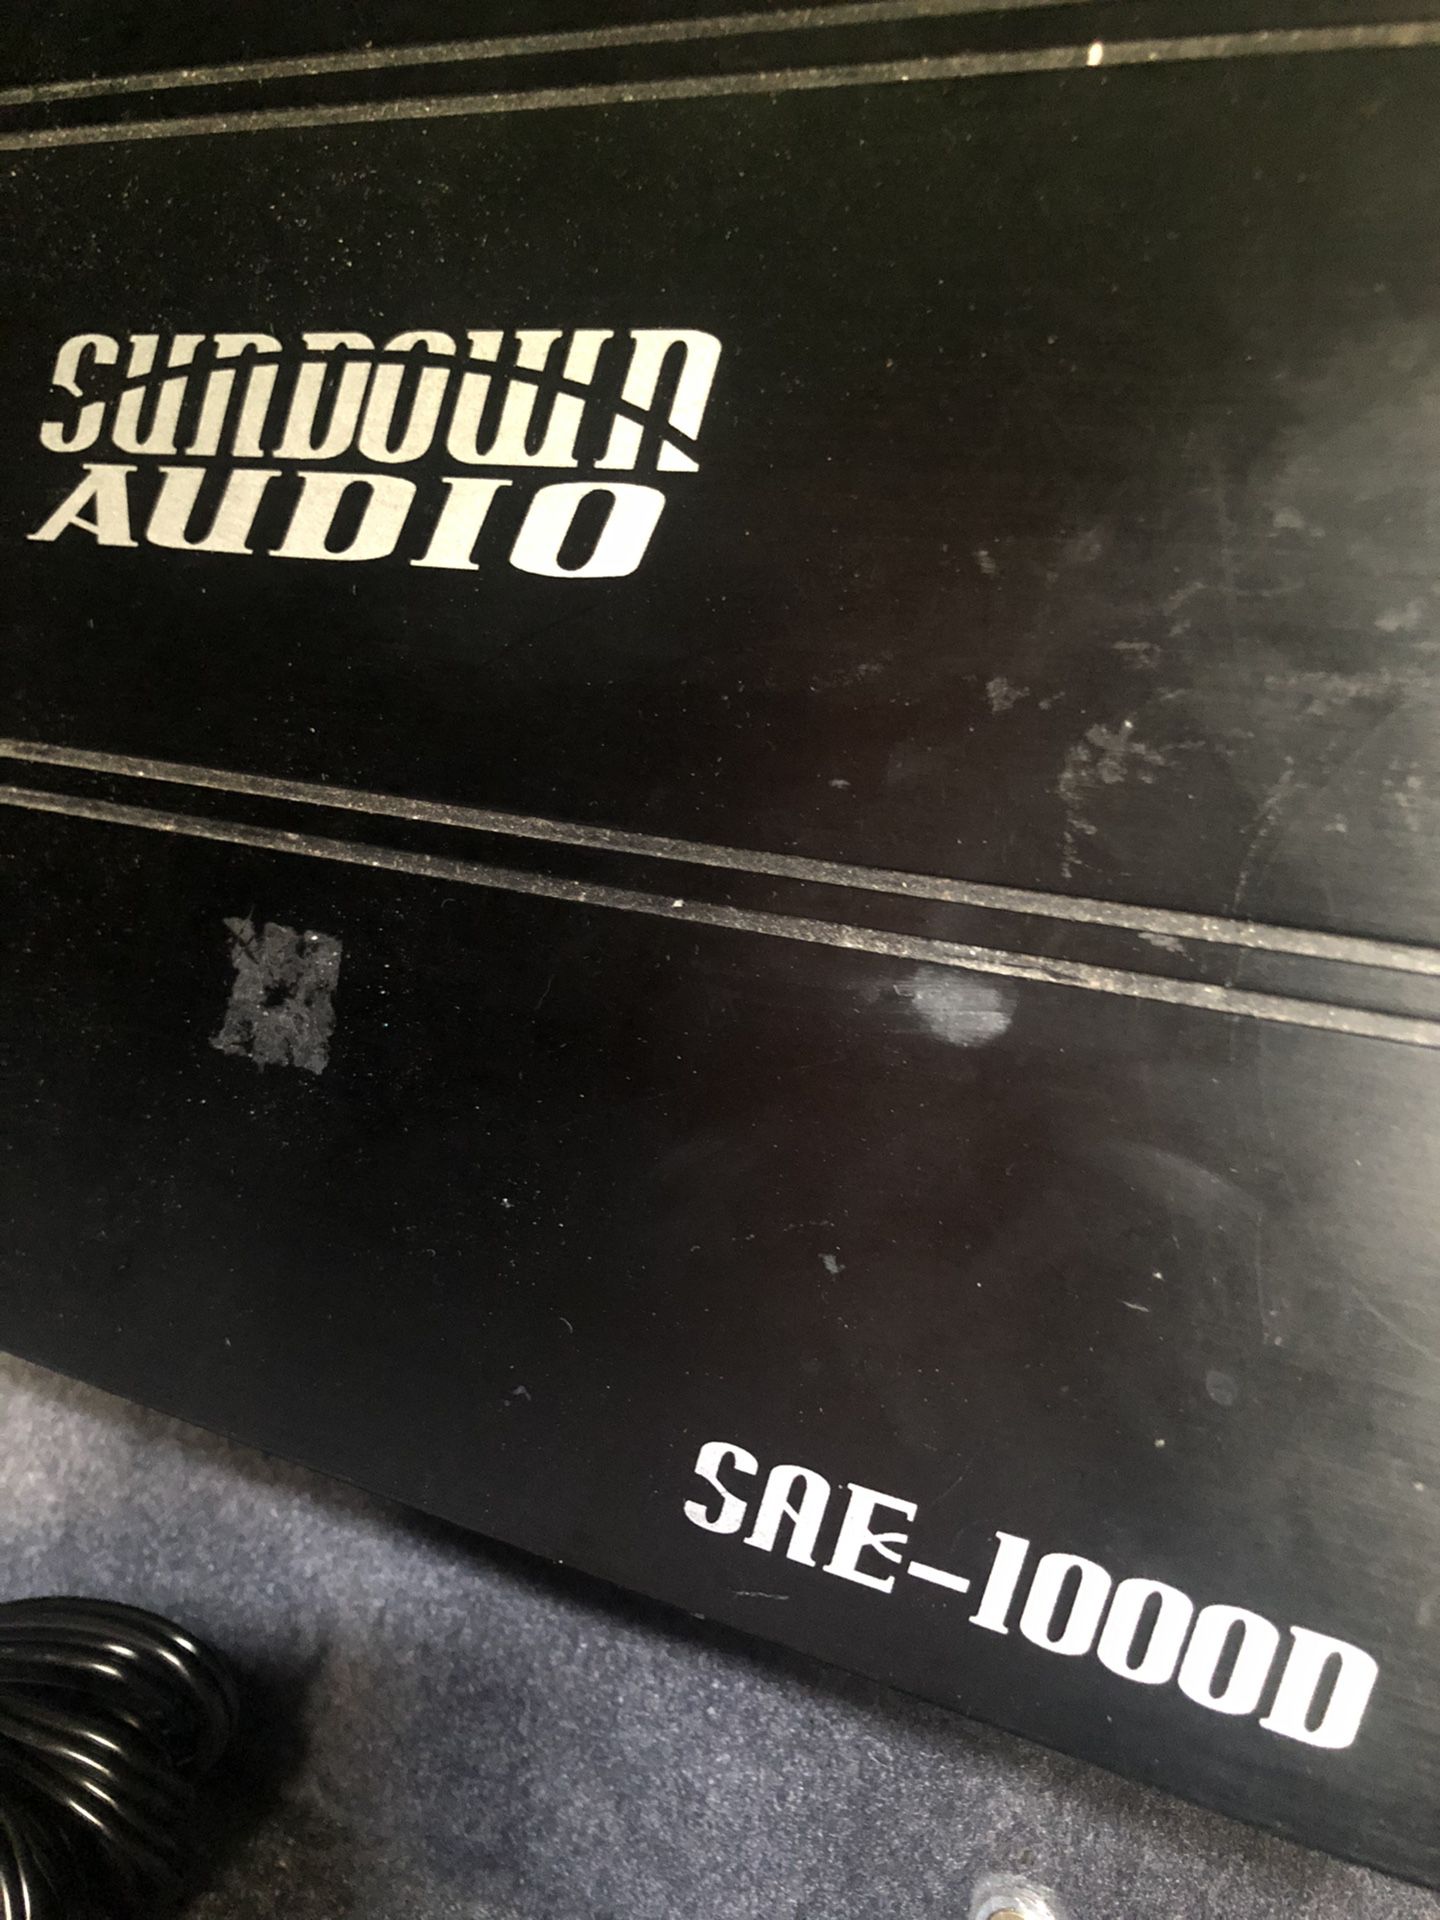 Sundown amp sae-1000d